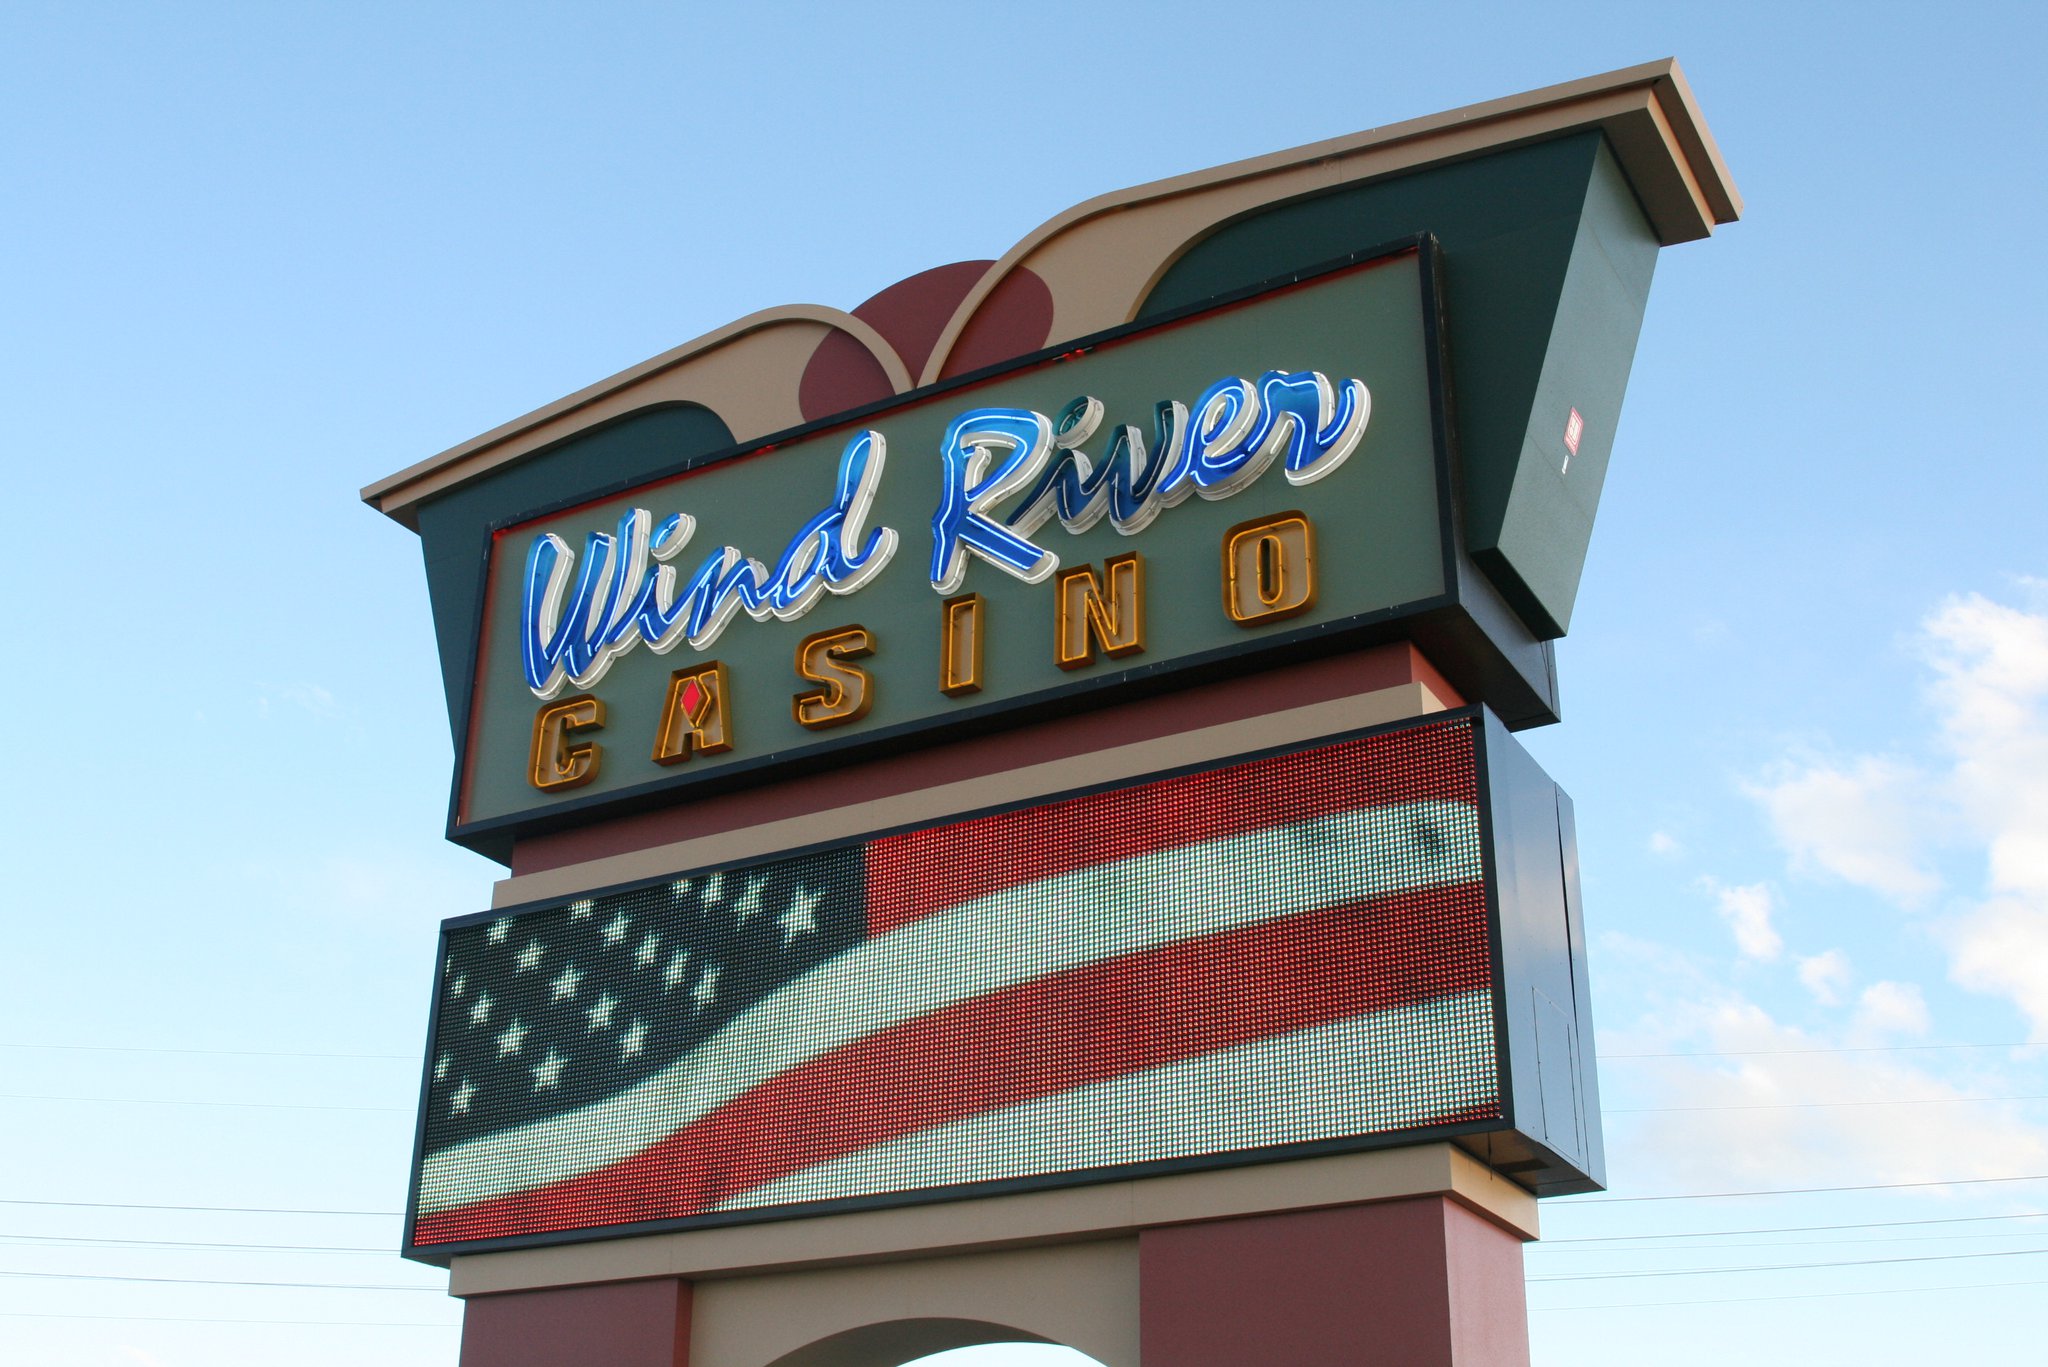 satellite view of wind river casino